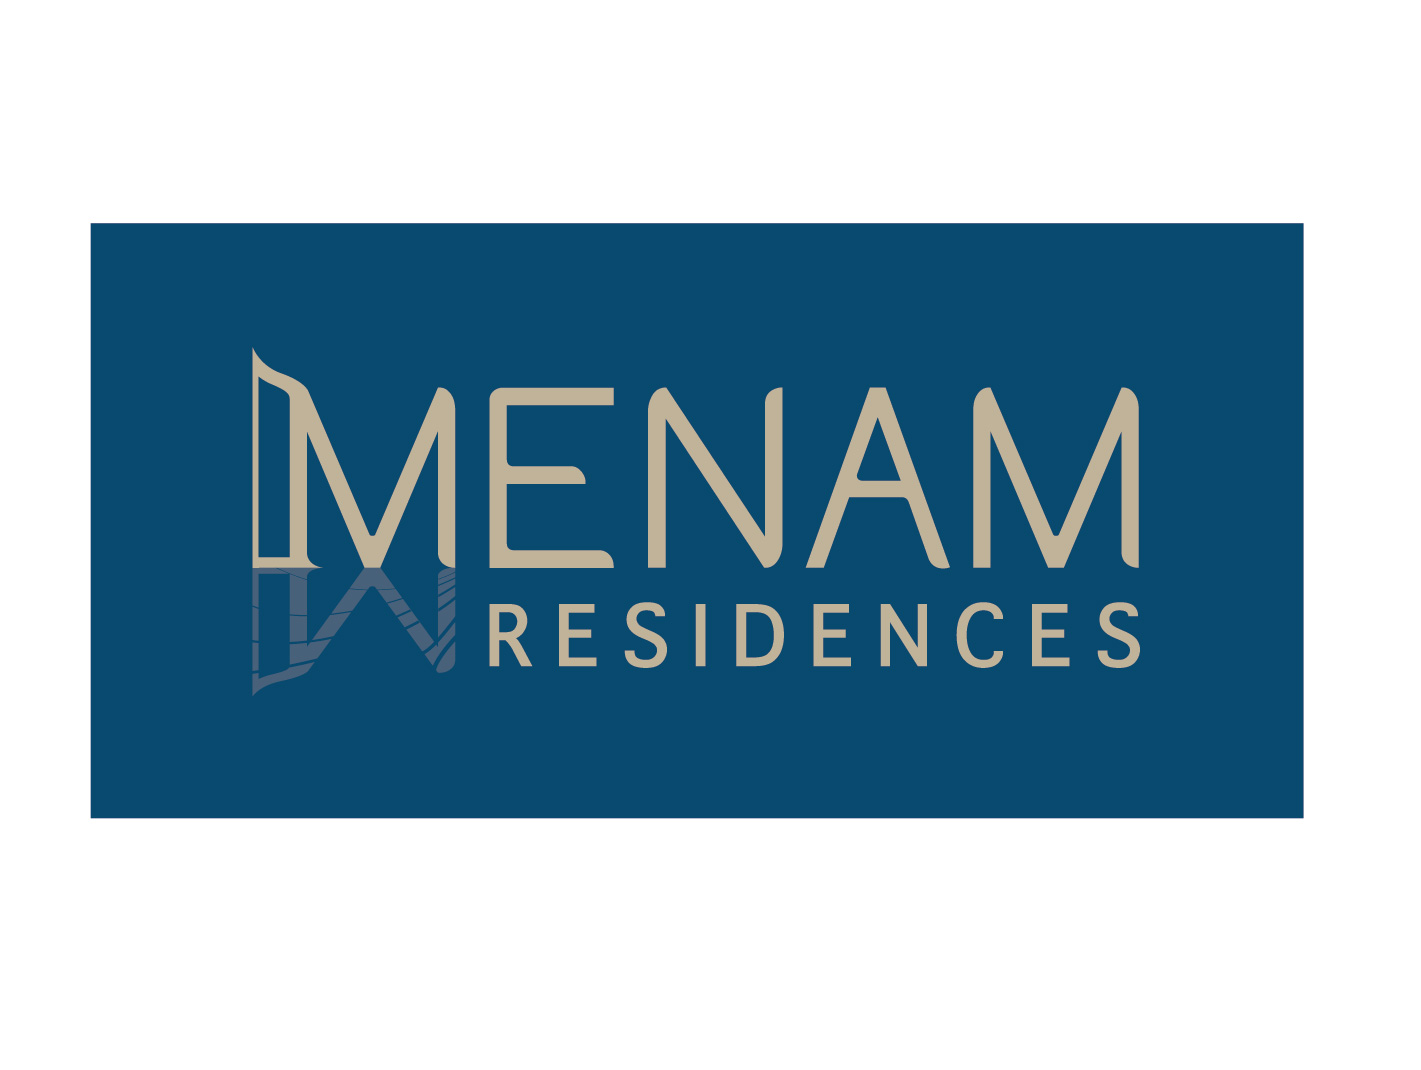 Menam Residences Co., Ltd